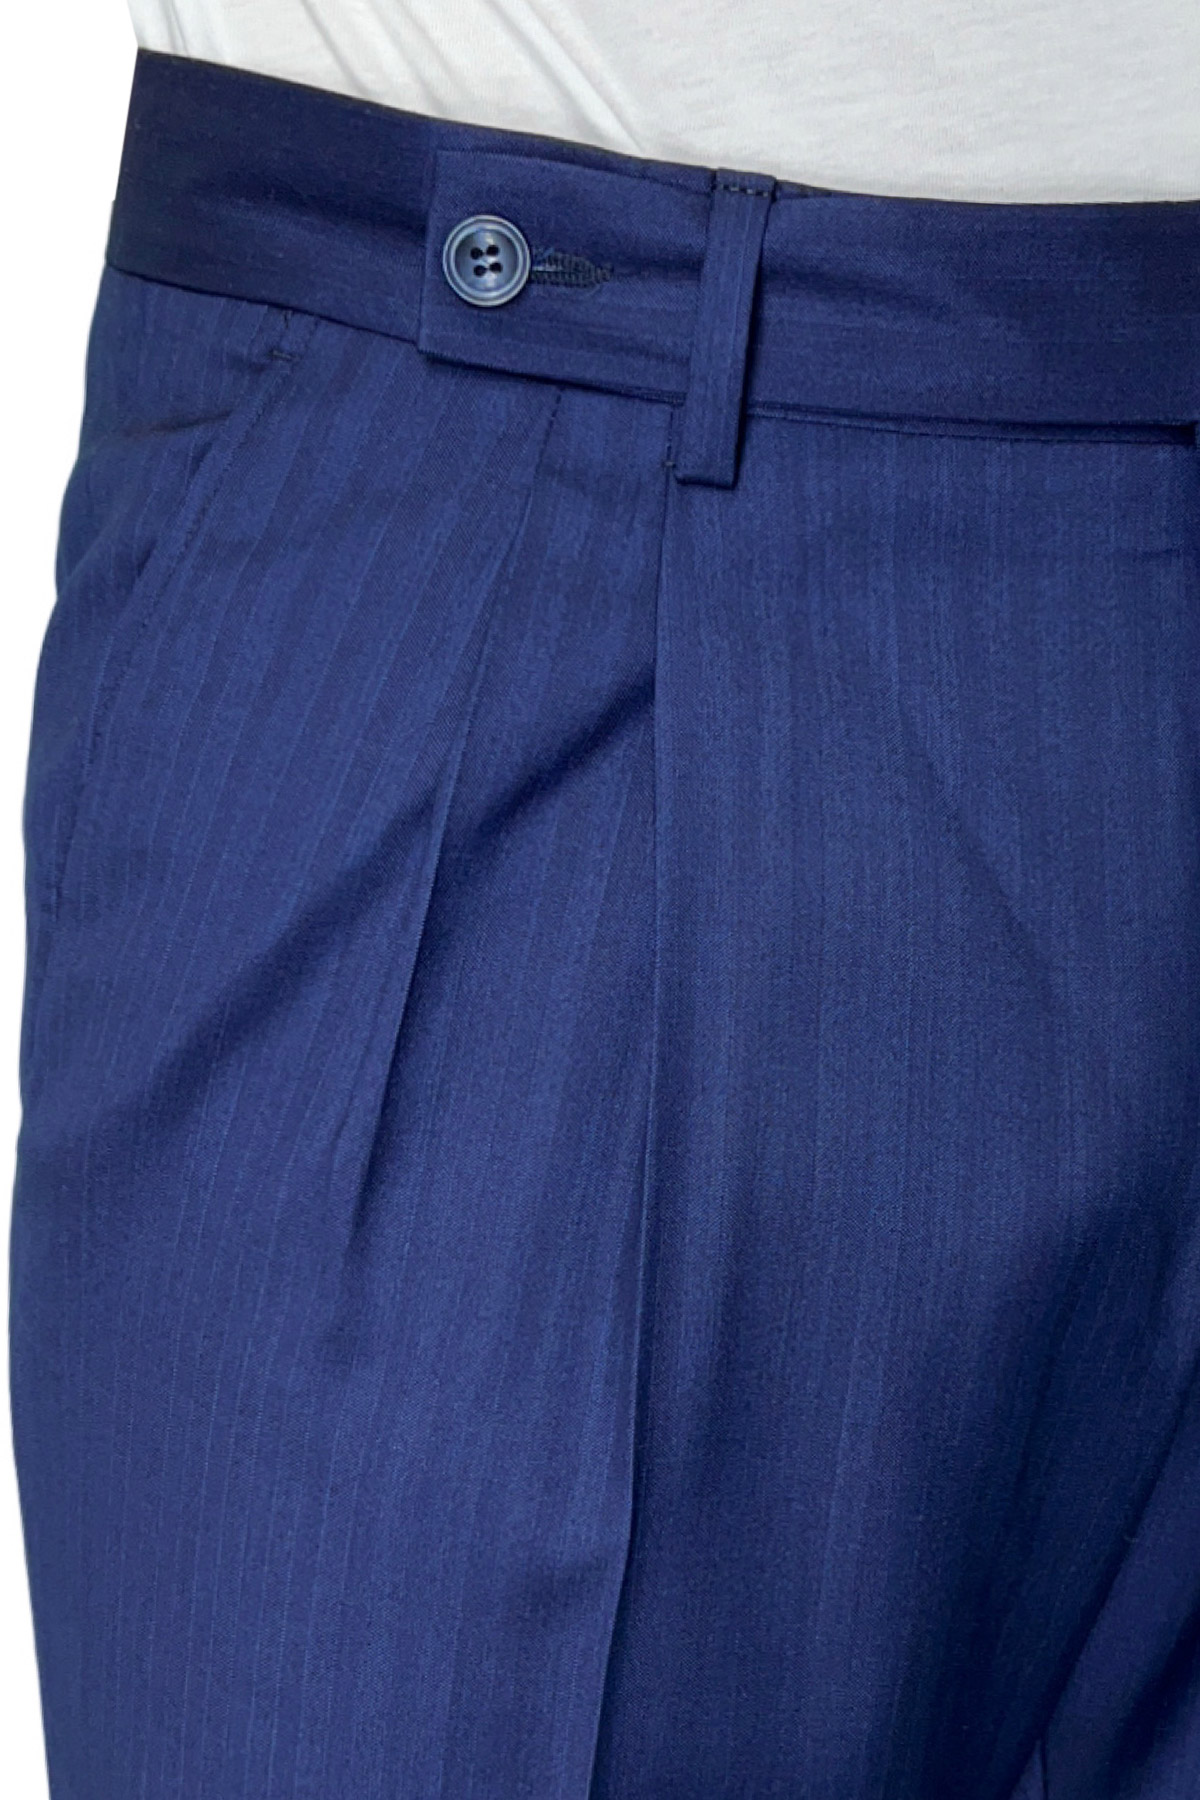 Pantalone uomo royal blu chiusura prolungata doppia pinces in fresco lana e seta Solaro Vitale Barberis Canonico